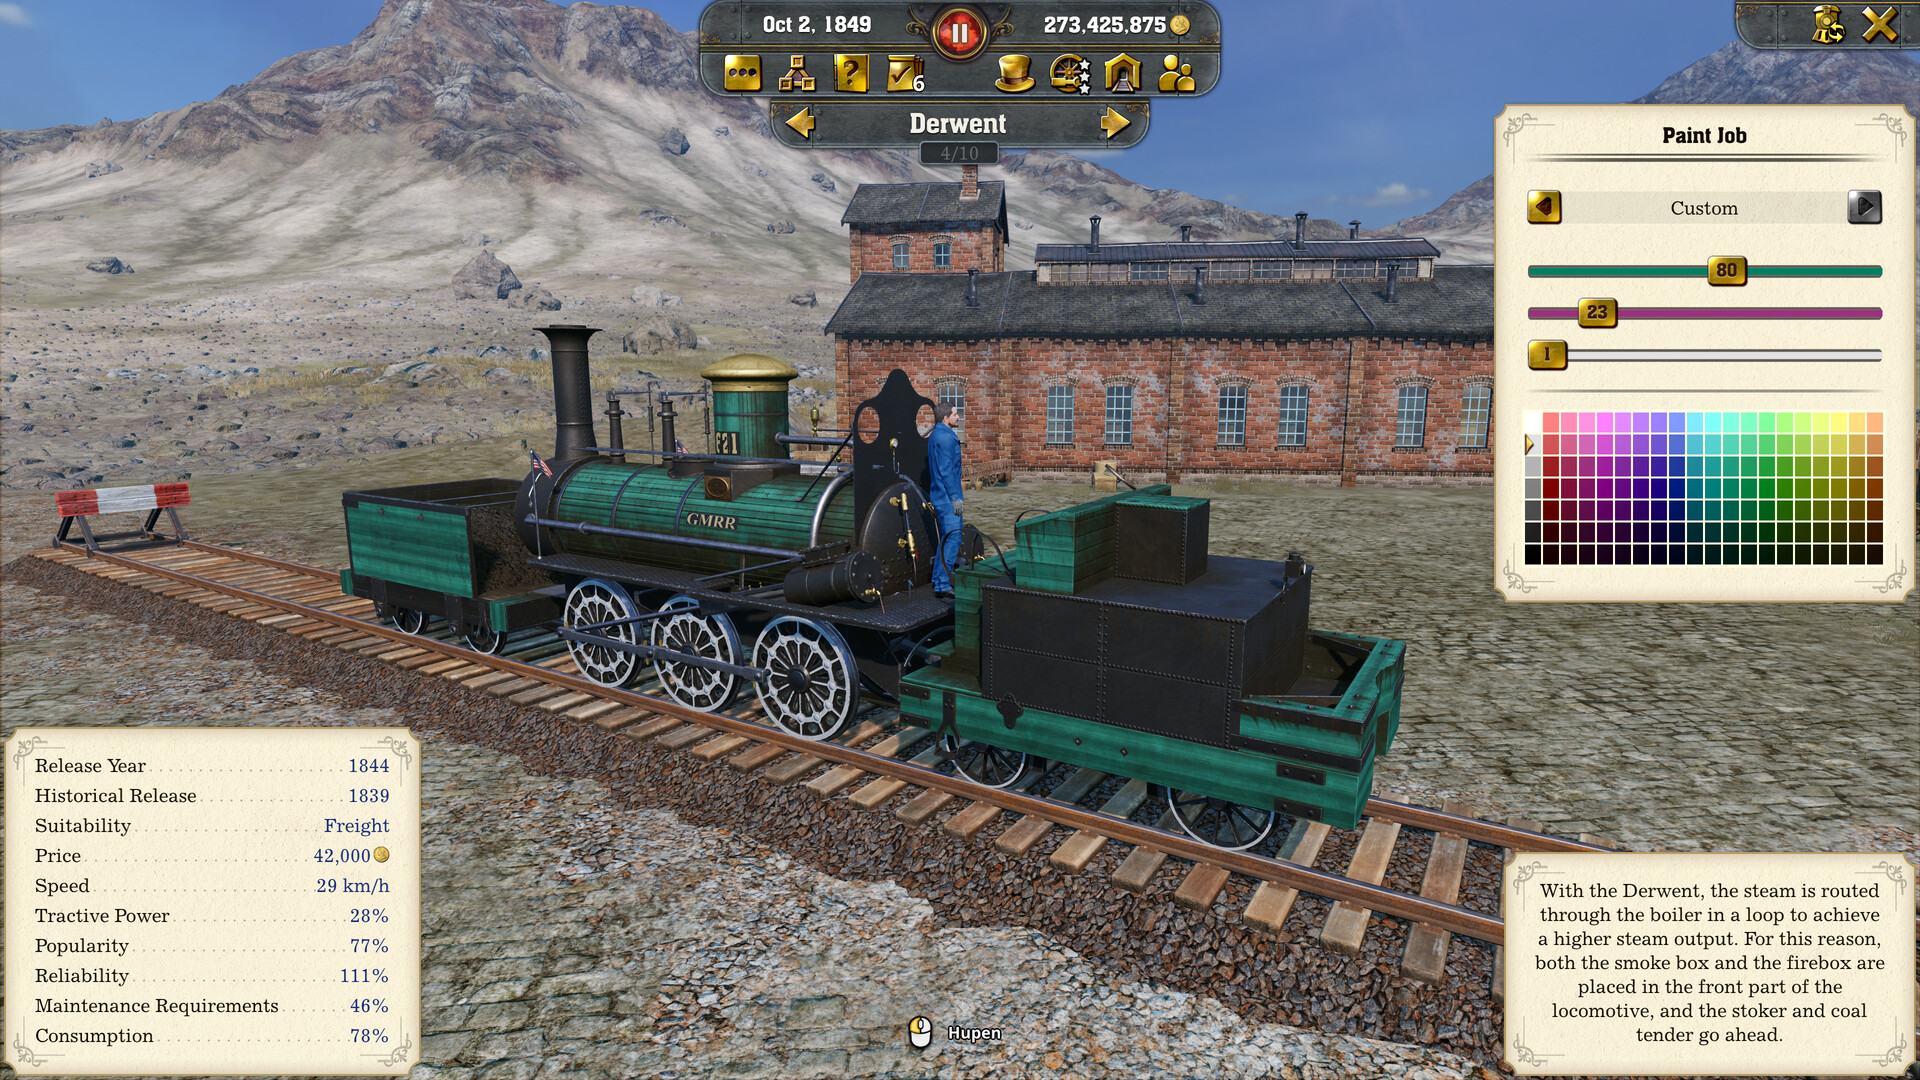 Jogar Railway Empire 2  Xbox Cloud Gaming (Beta) em